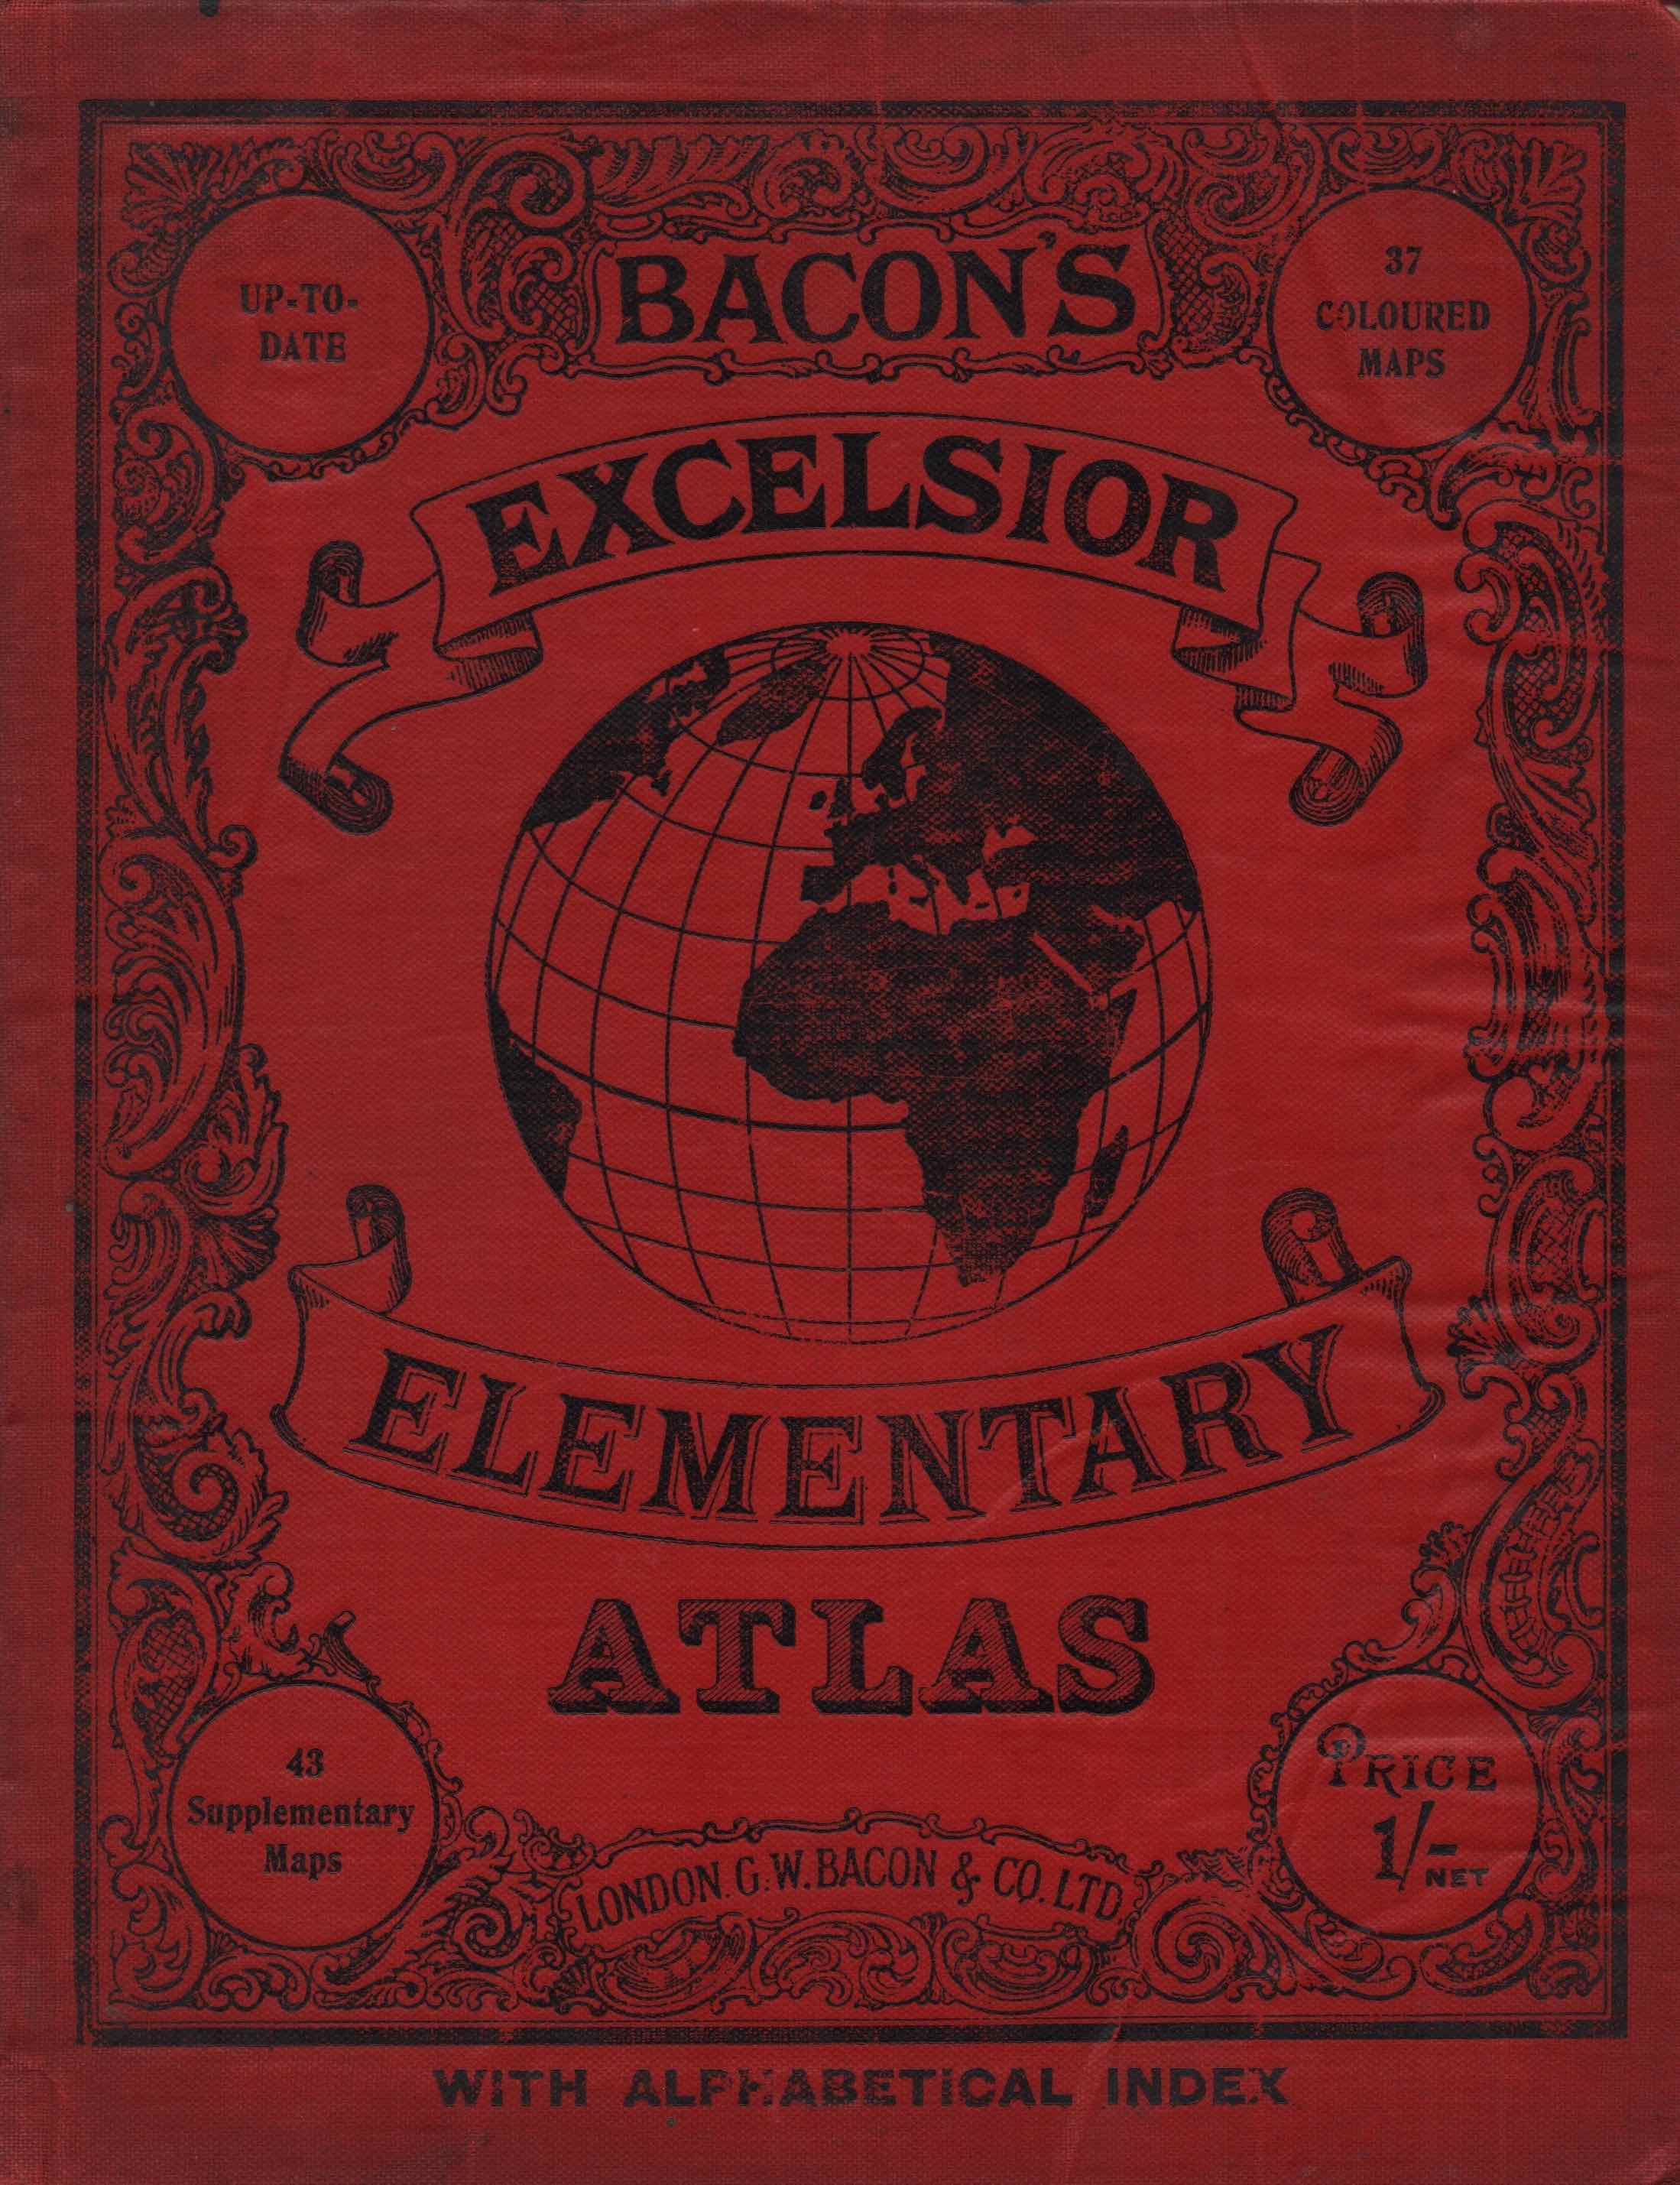 Bacon's Excelsior Elementary Atlas